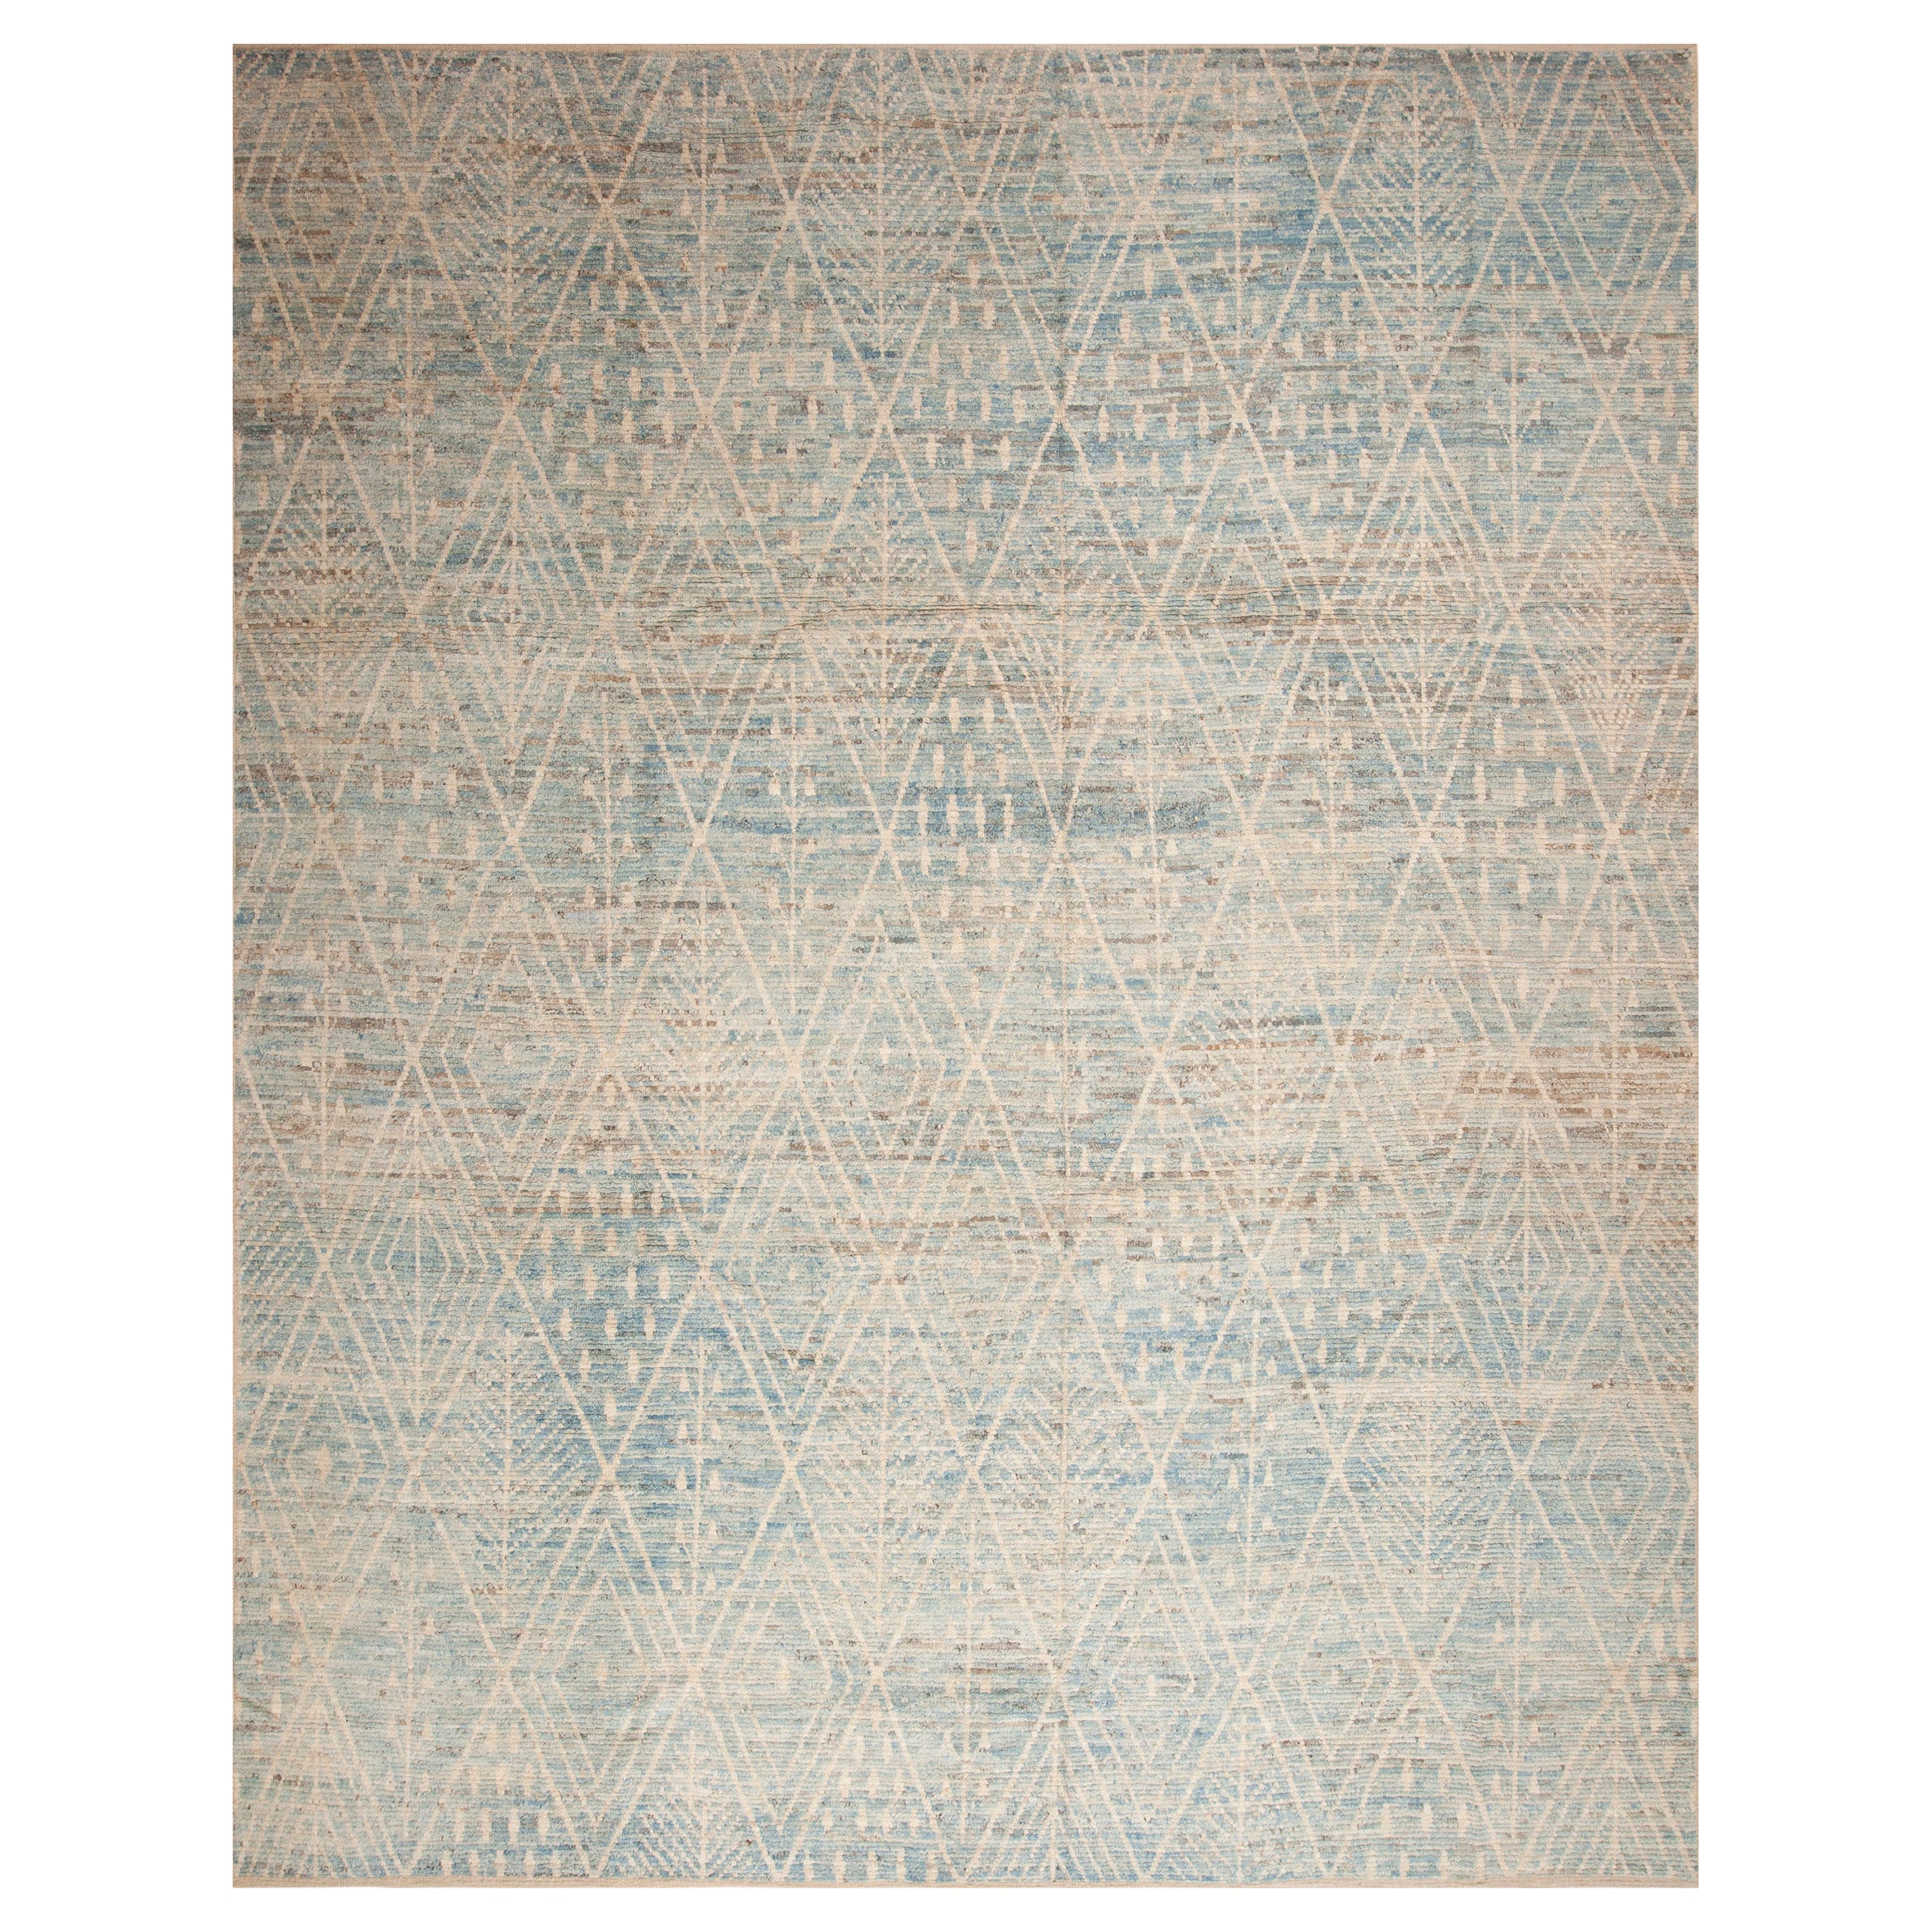 Collection Nazmiyal - Grand tapis Beni Ourain marocain tribal et moderne de 12' x 15' en vente